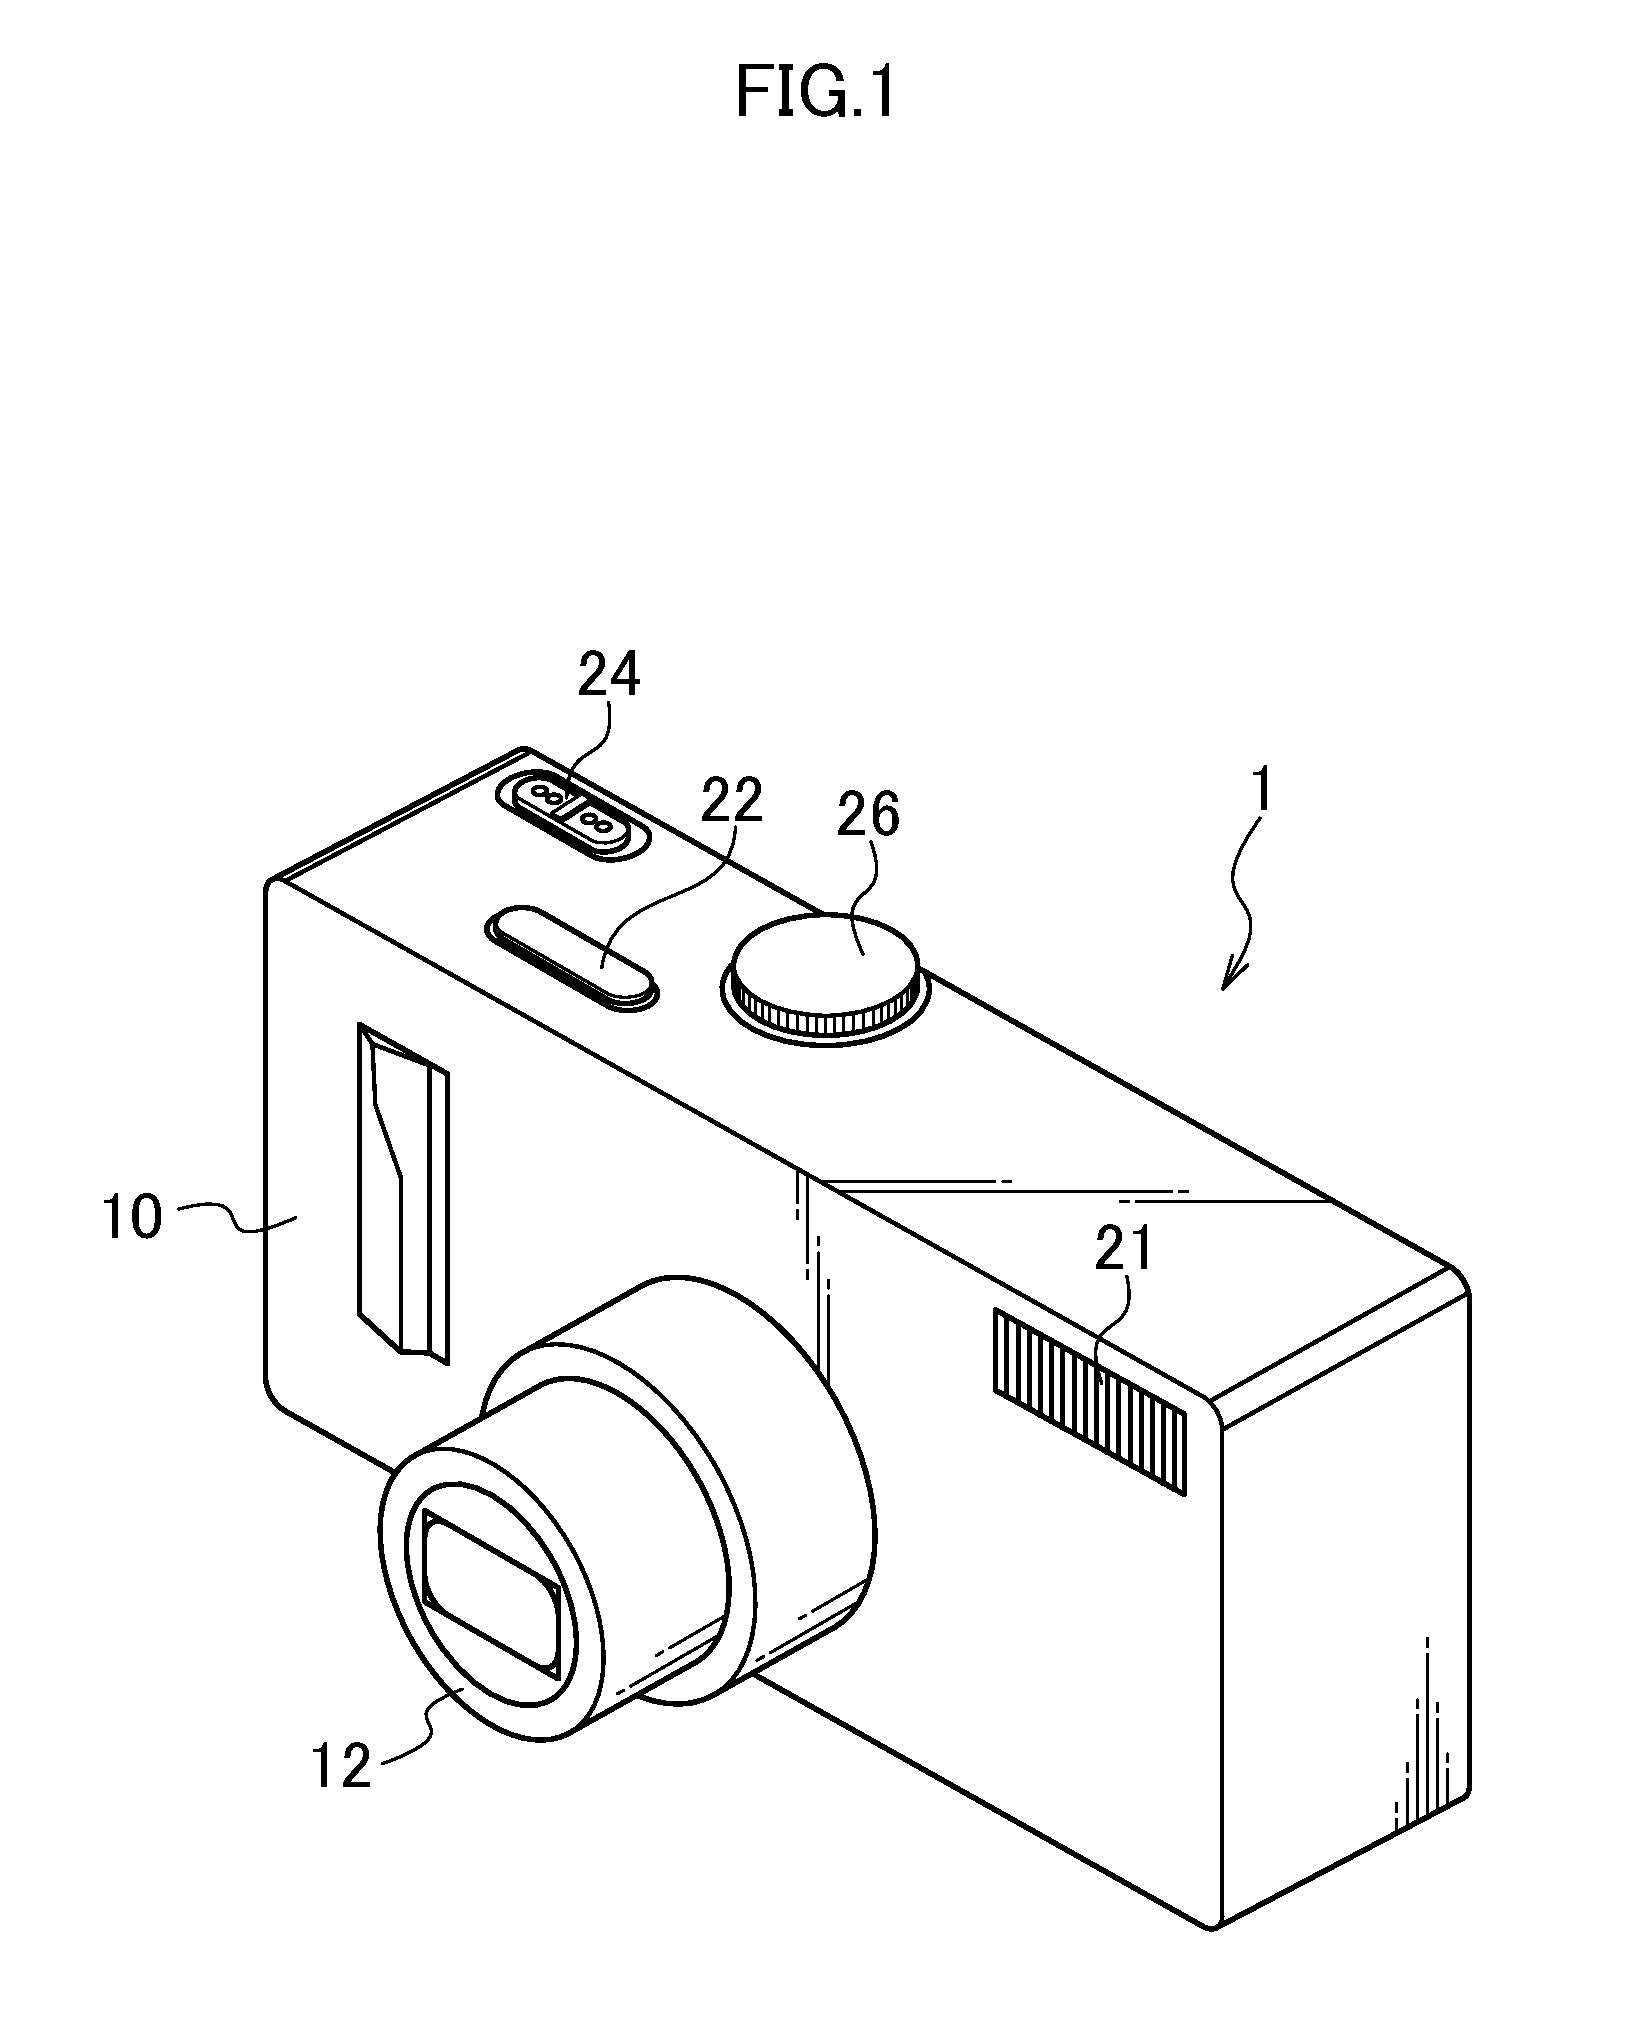 Monocular stereoscopic imaging device